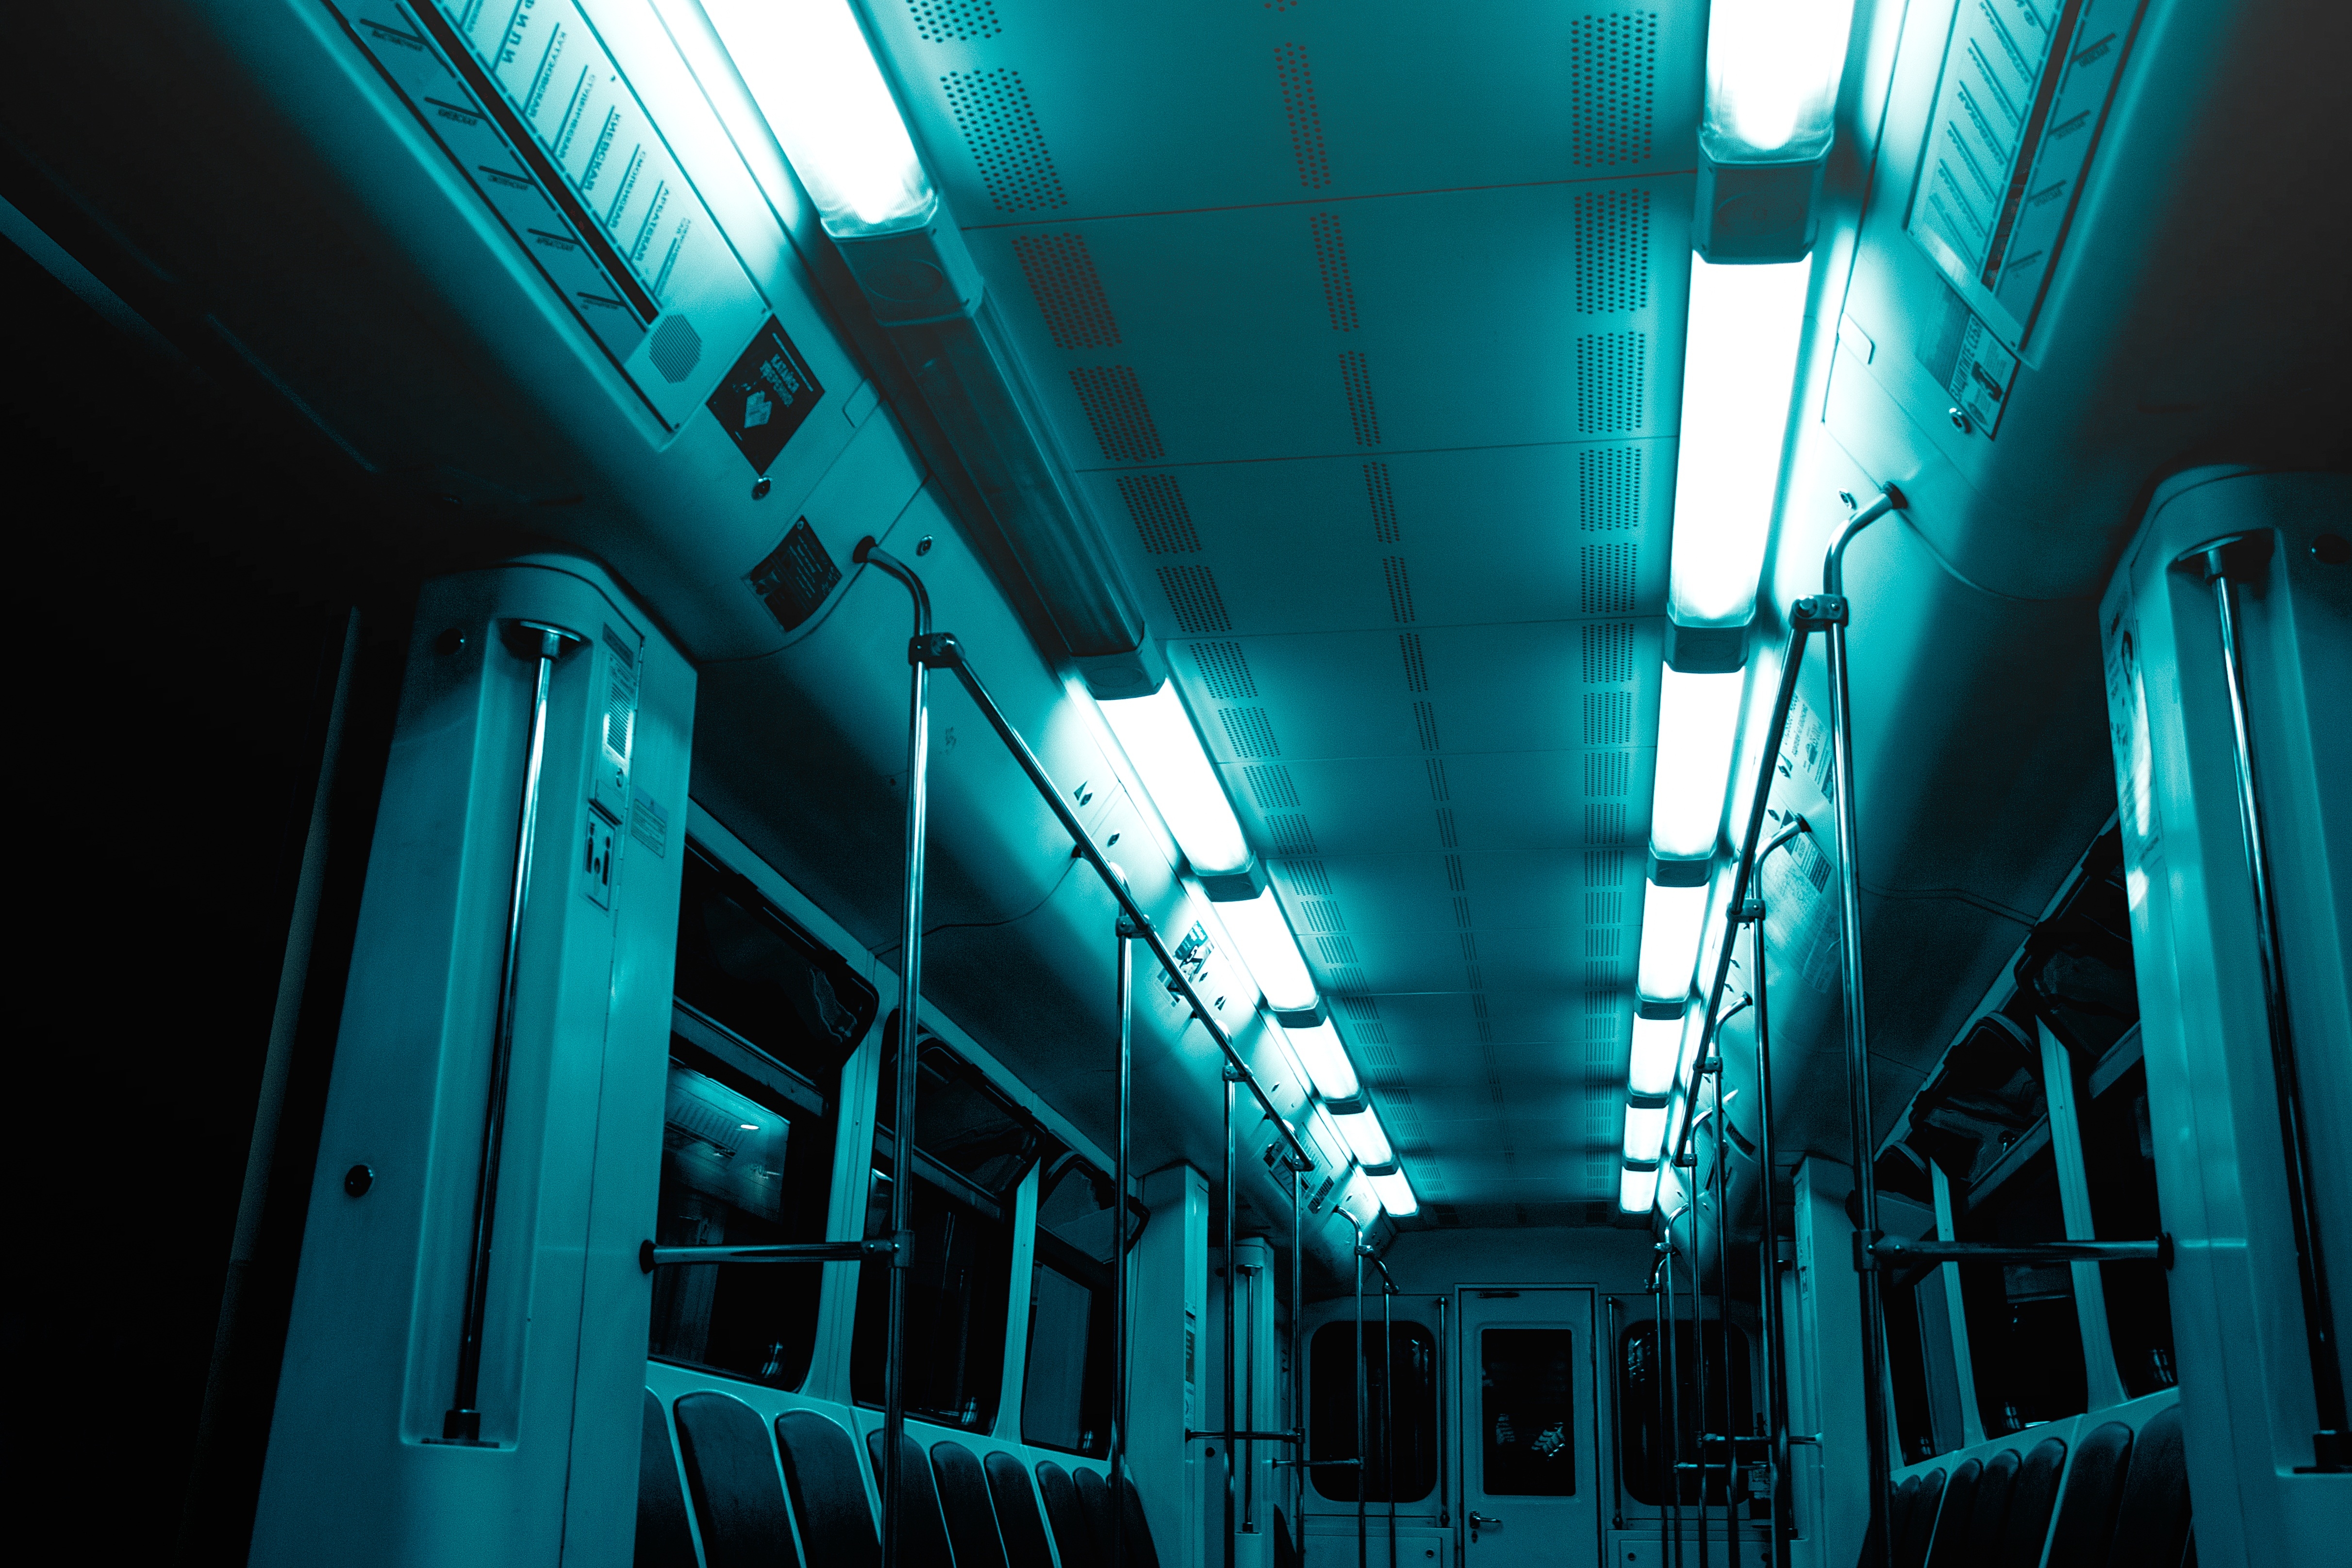 subway, lighting, shine, light, miscellanea, miscellaneous, car, lamp, illumination, lamps, metro, railway carriage